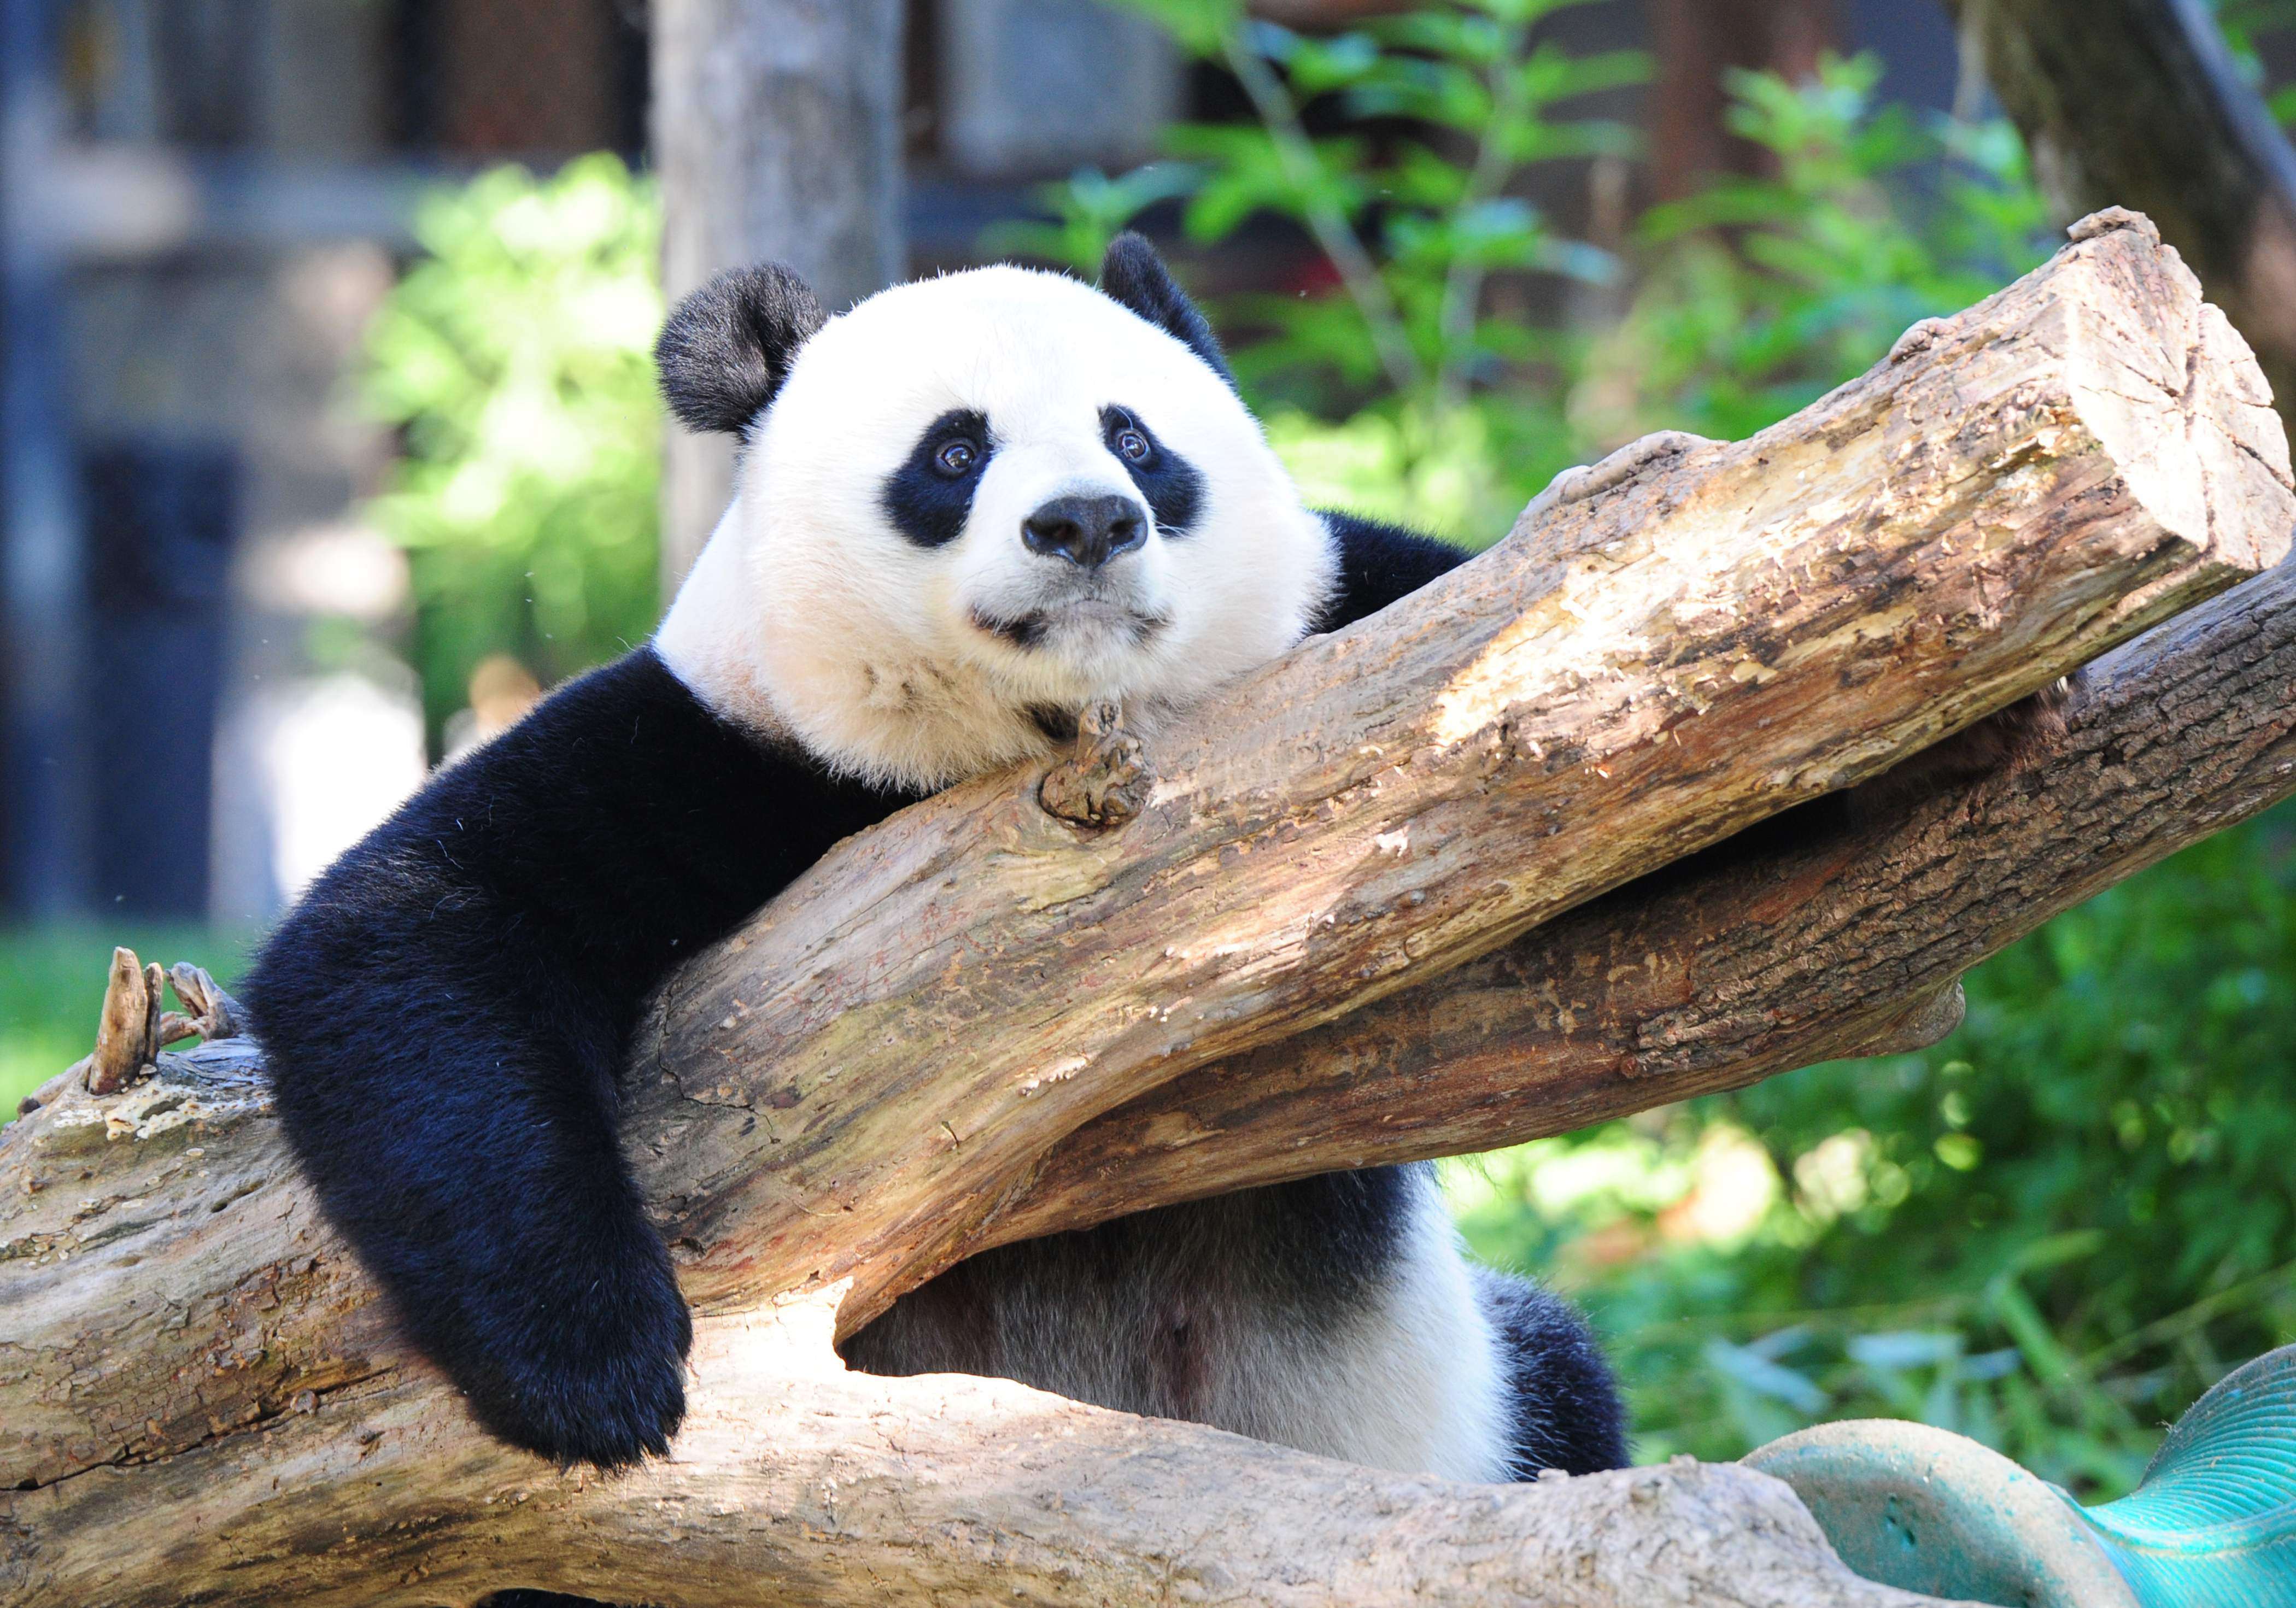 Giant pandas taken off global 'endangered' list as population rebounds |  South China Morning Post